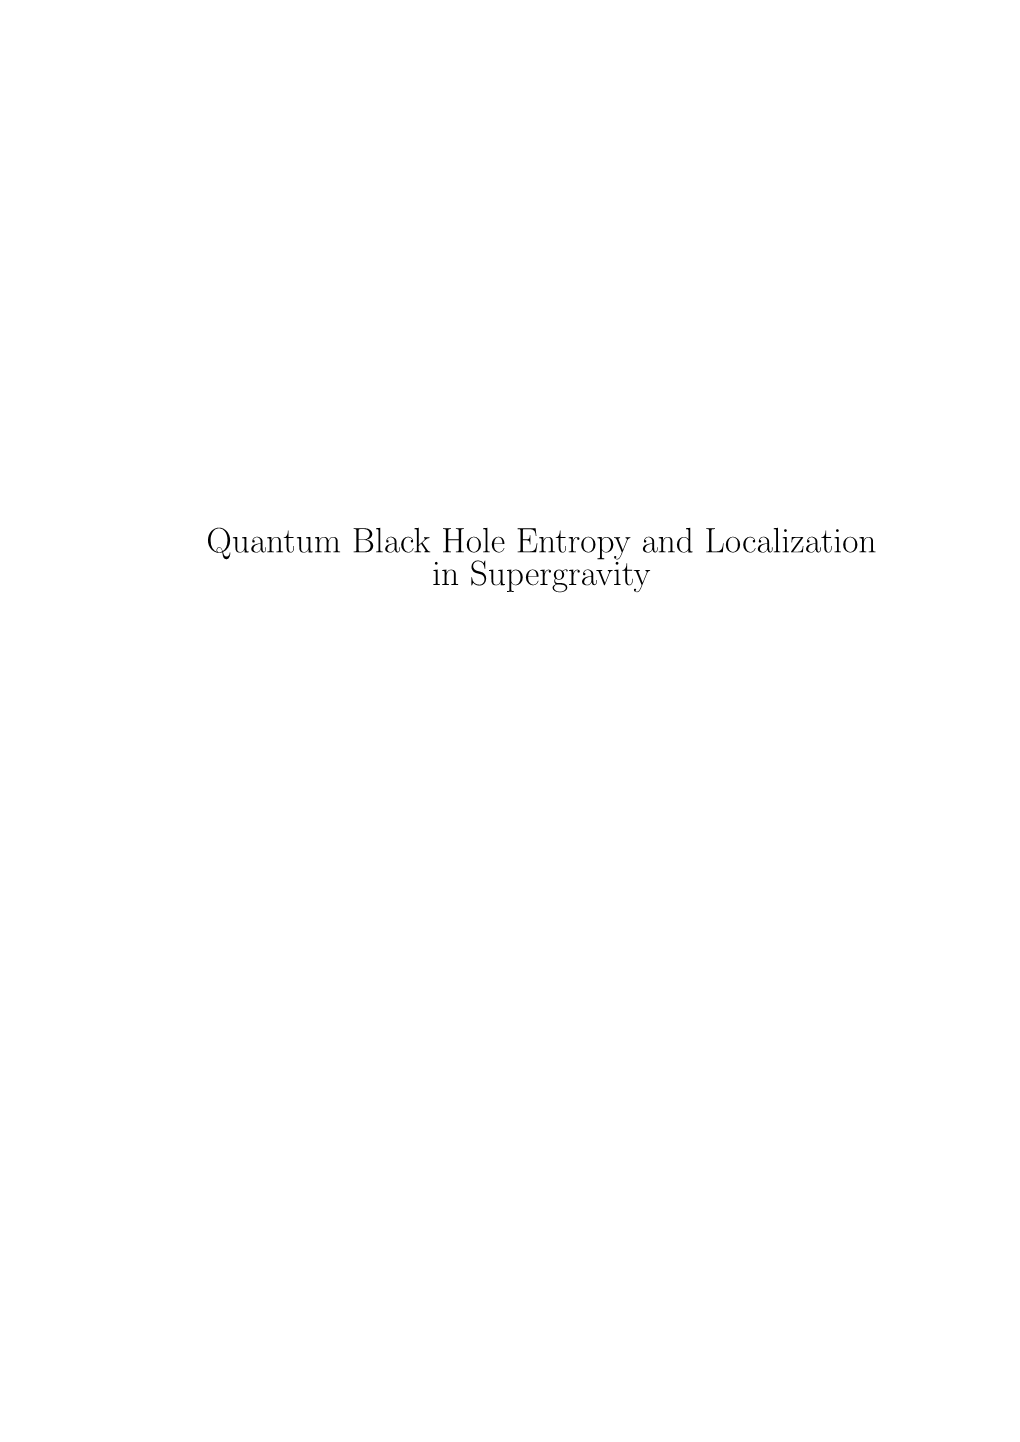 Quantum Black Hole Entropy and Localization in Supergravity Ph.D